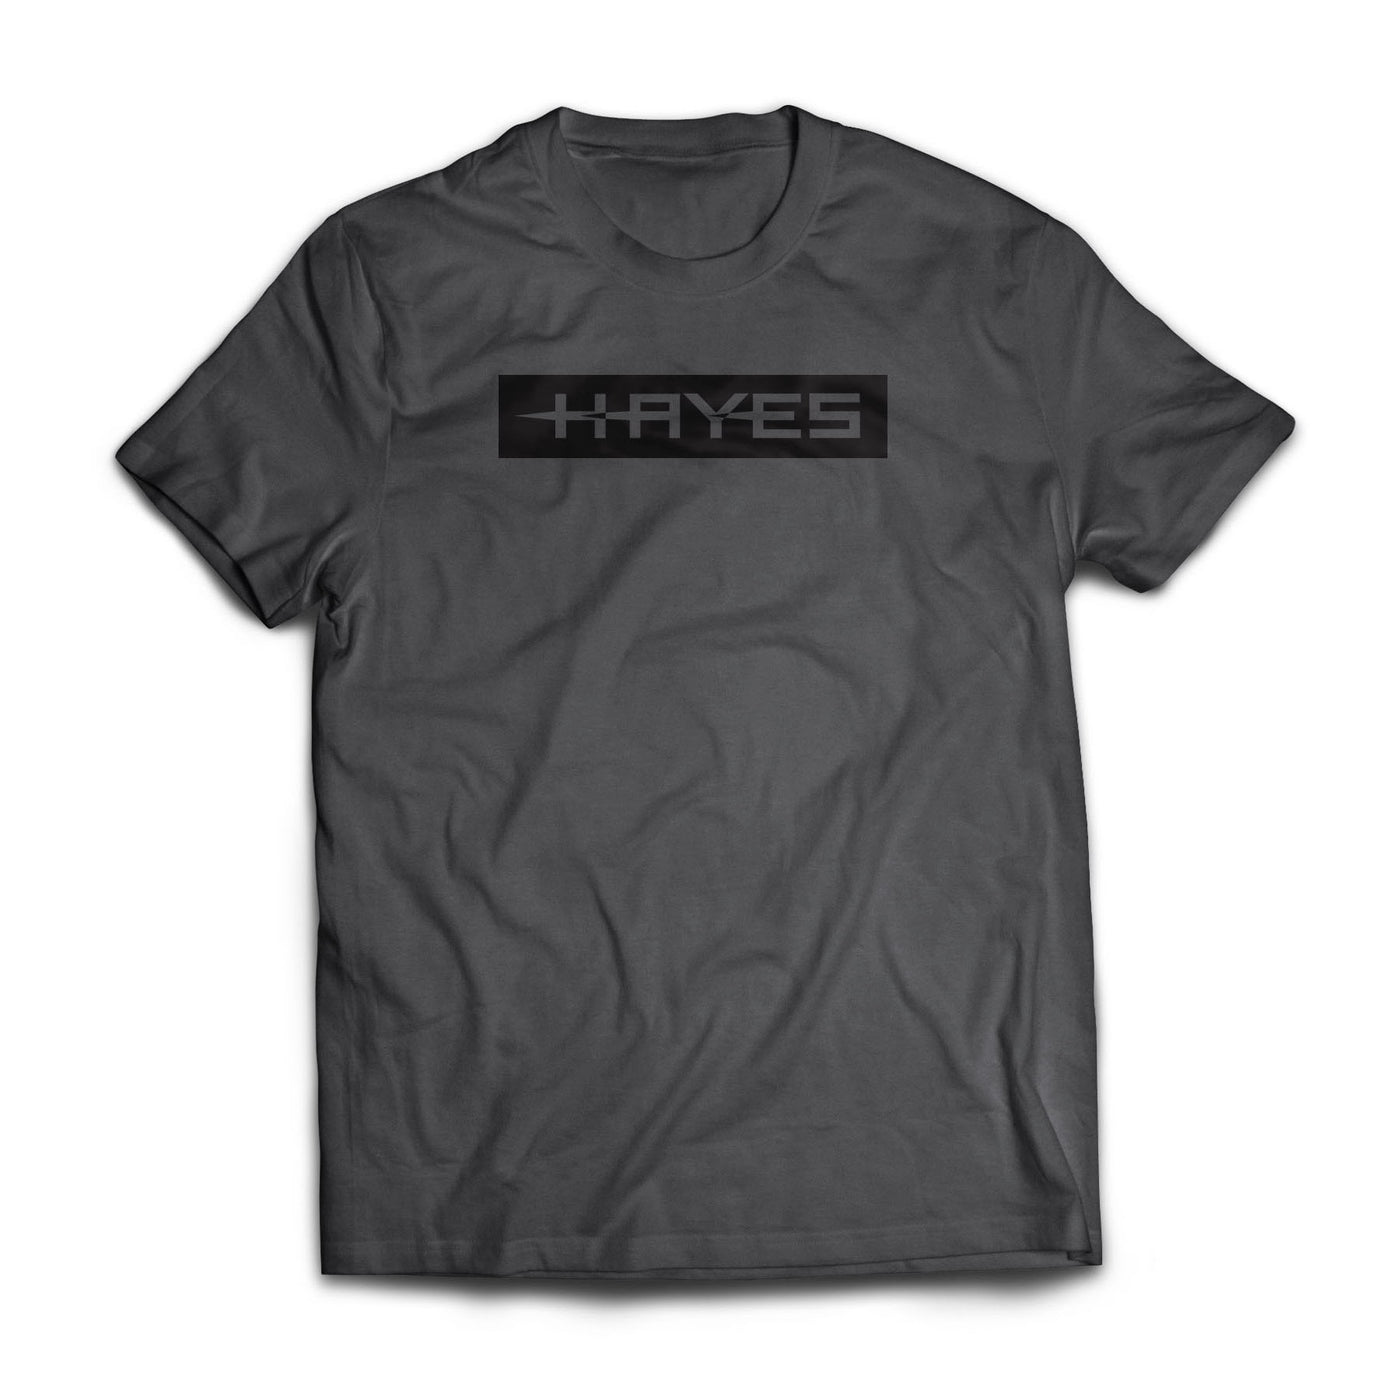 Hayes Disc Brakes | Hayes Block T-Shirt - Small